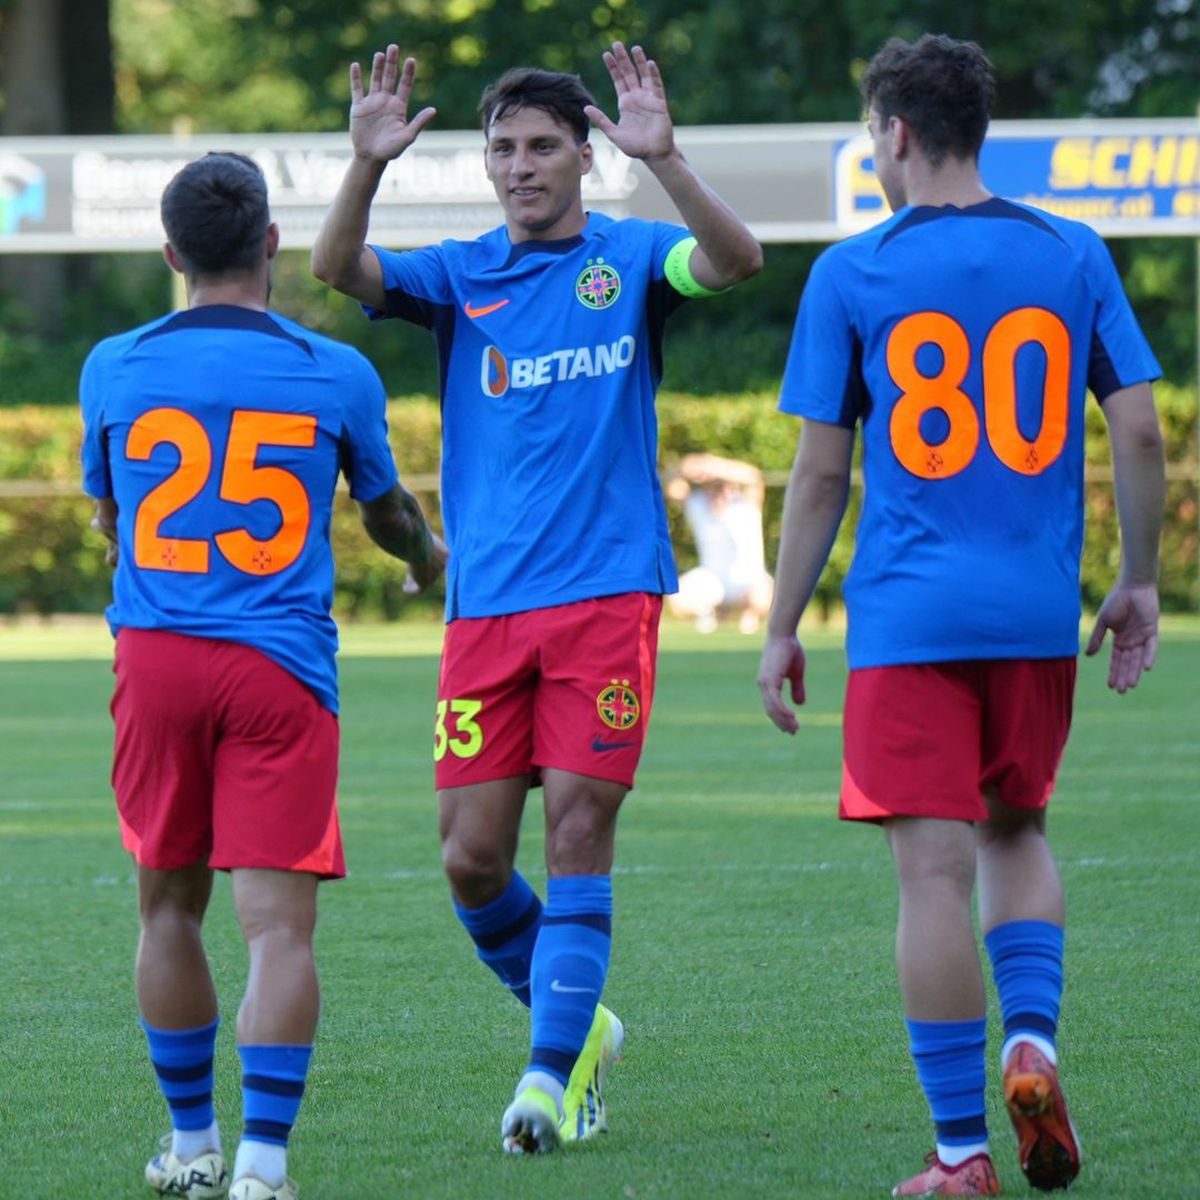 FCSB s-a distrat în primul amical din Olanda, 8-0 cu Apeldoorn. Foto: Instagram @fcsbofficial